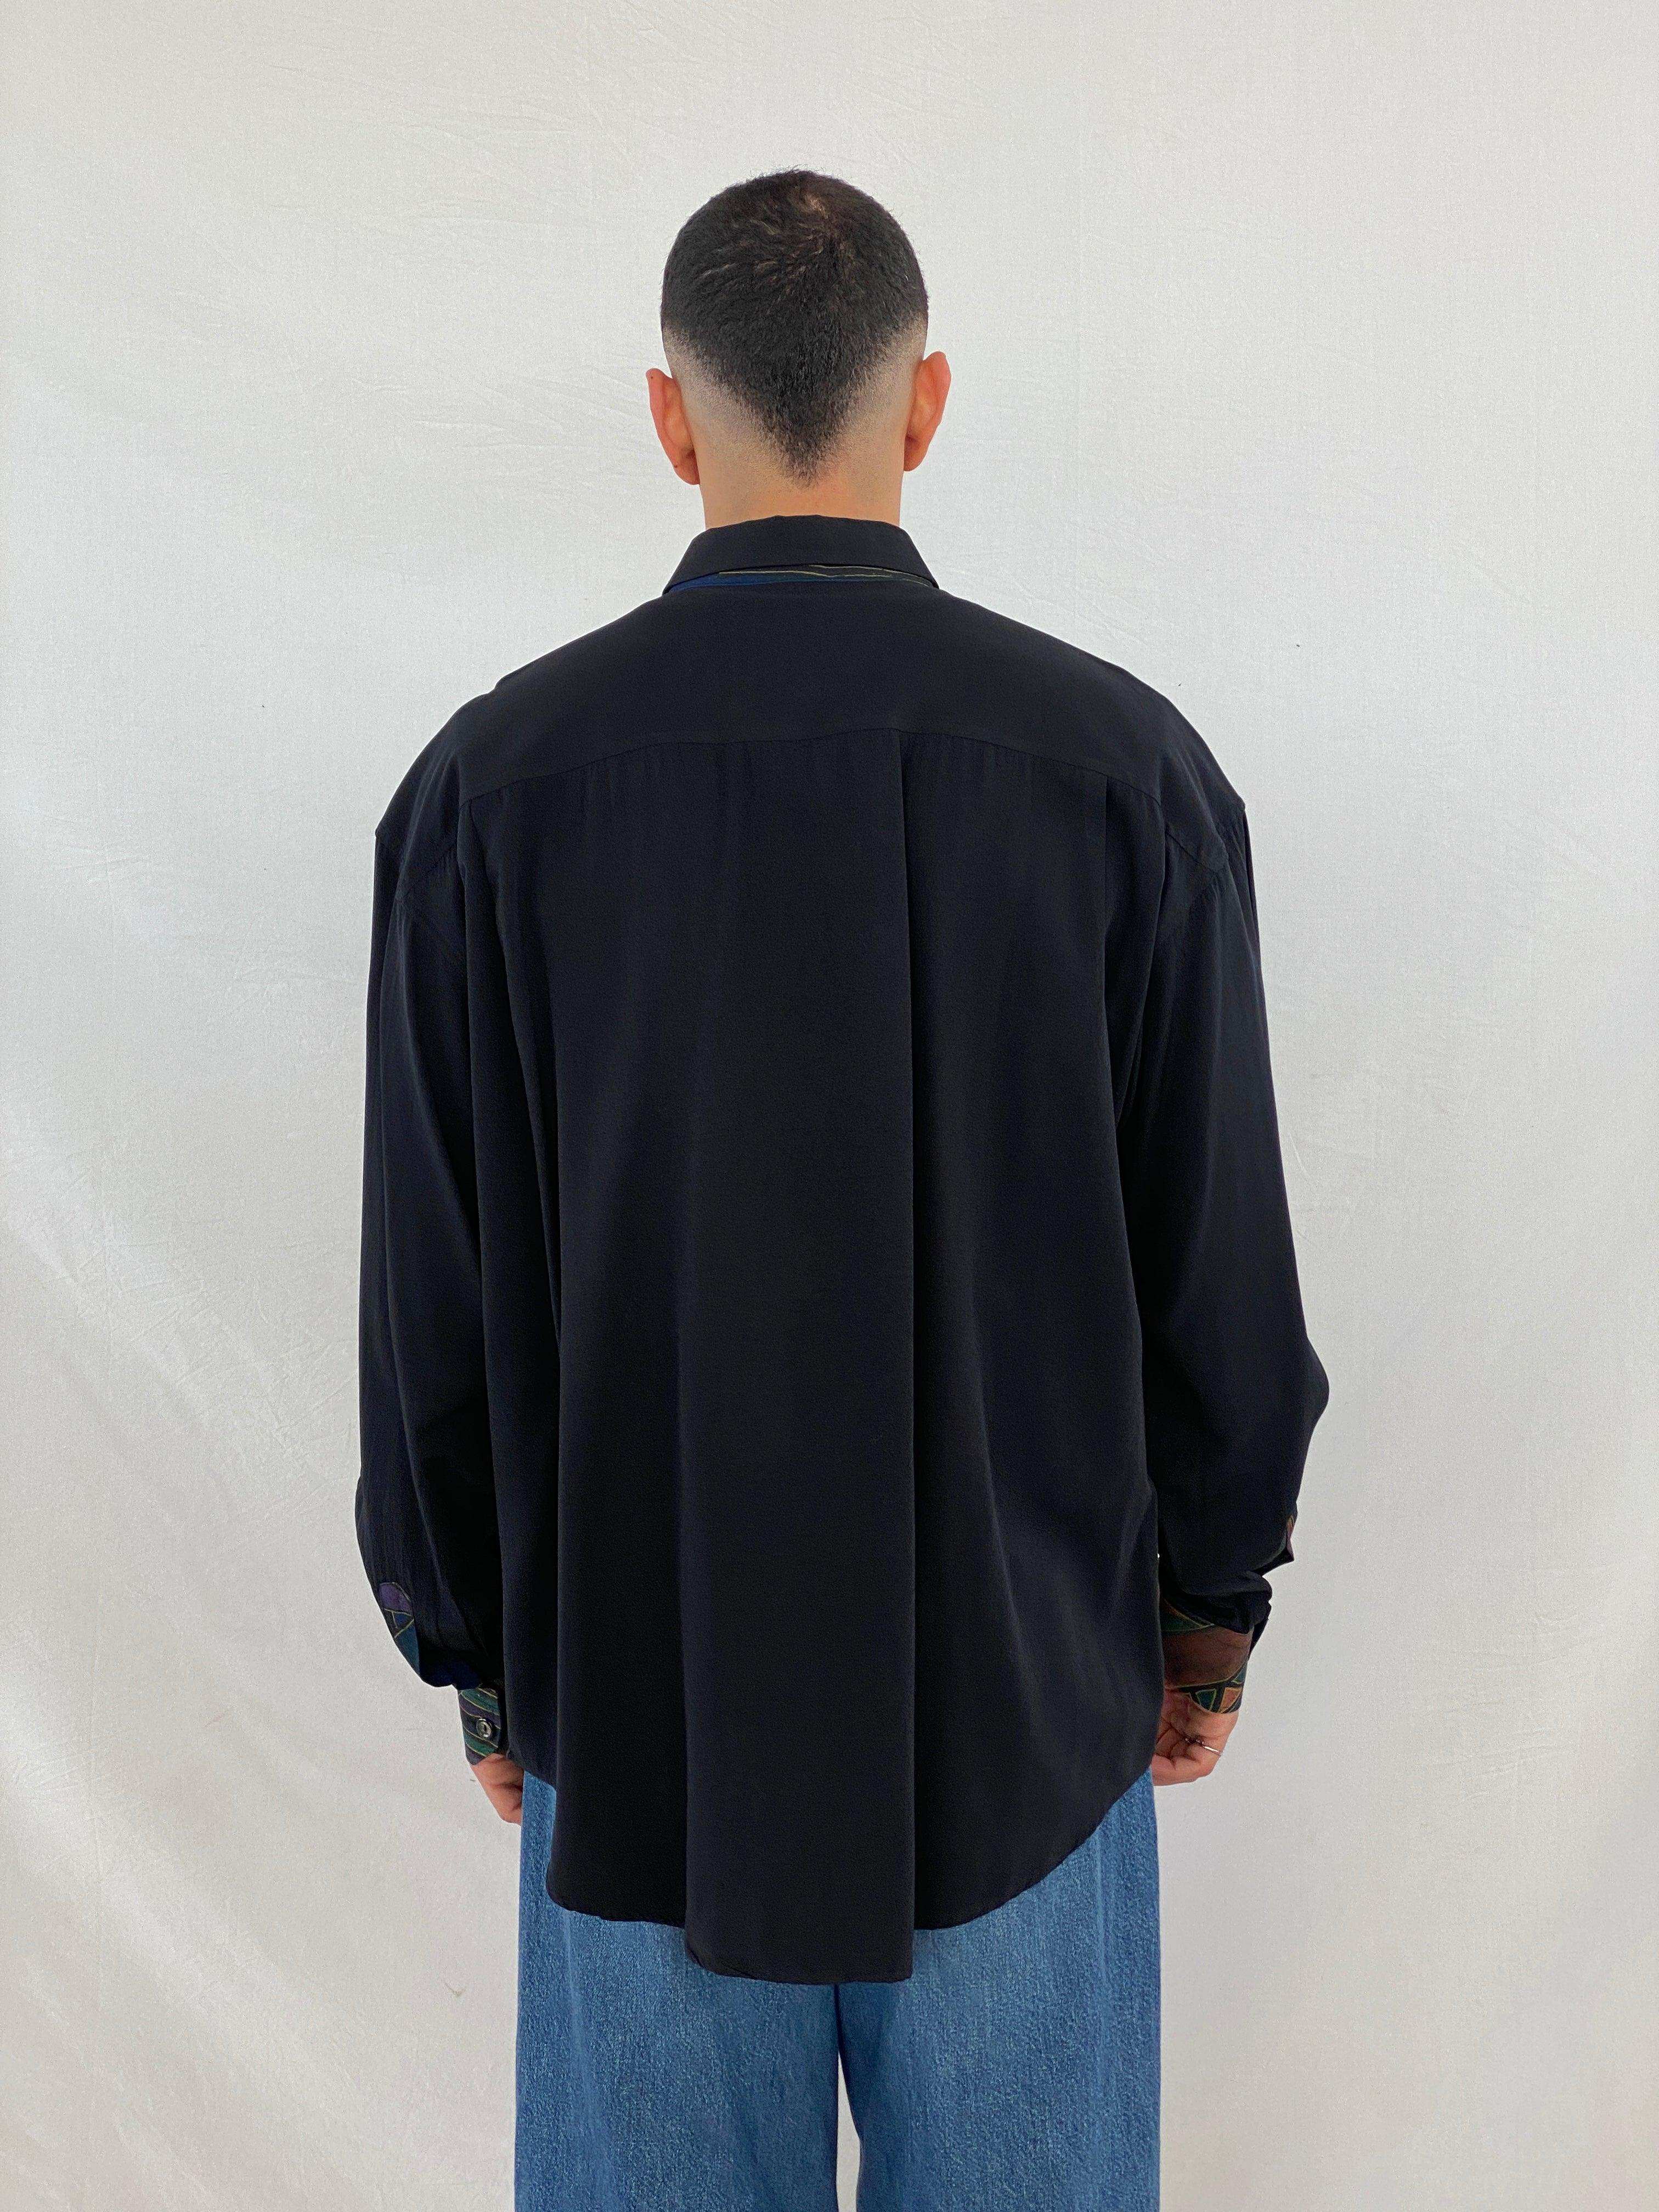 Vintage 90s Makline Full-Sleeve Shirt - Balagan Vintage Full Sleeve Shirt 90s, Abdullah, full sleeve shirt, NEW IN